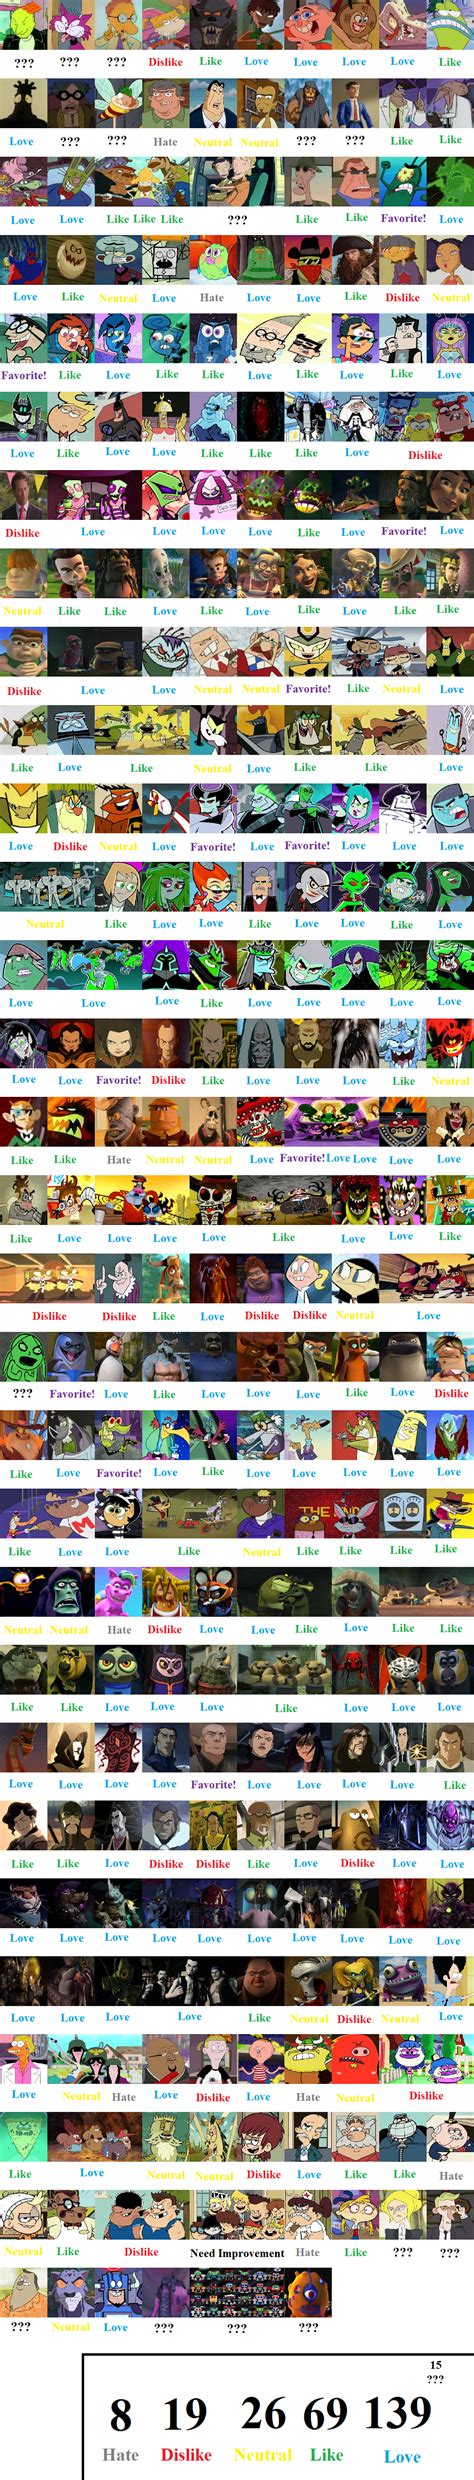 Nicktoons Antagonists Scorecard By Mranimatedtoon On